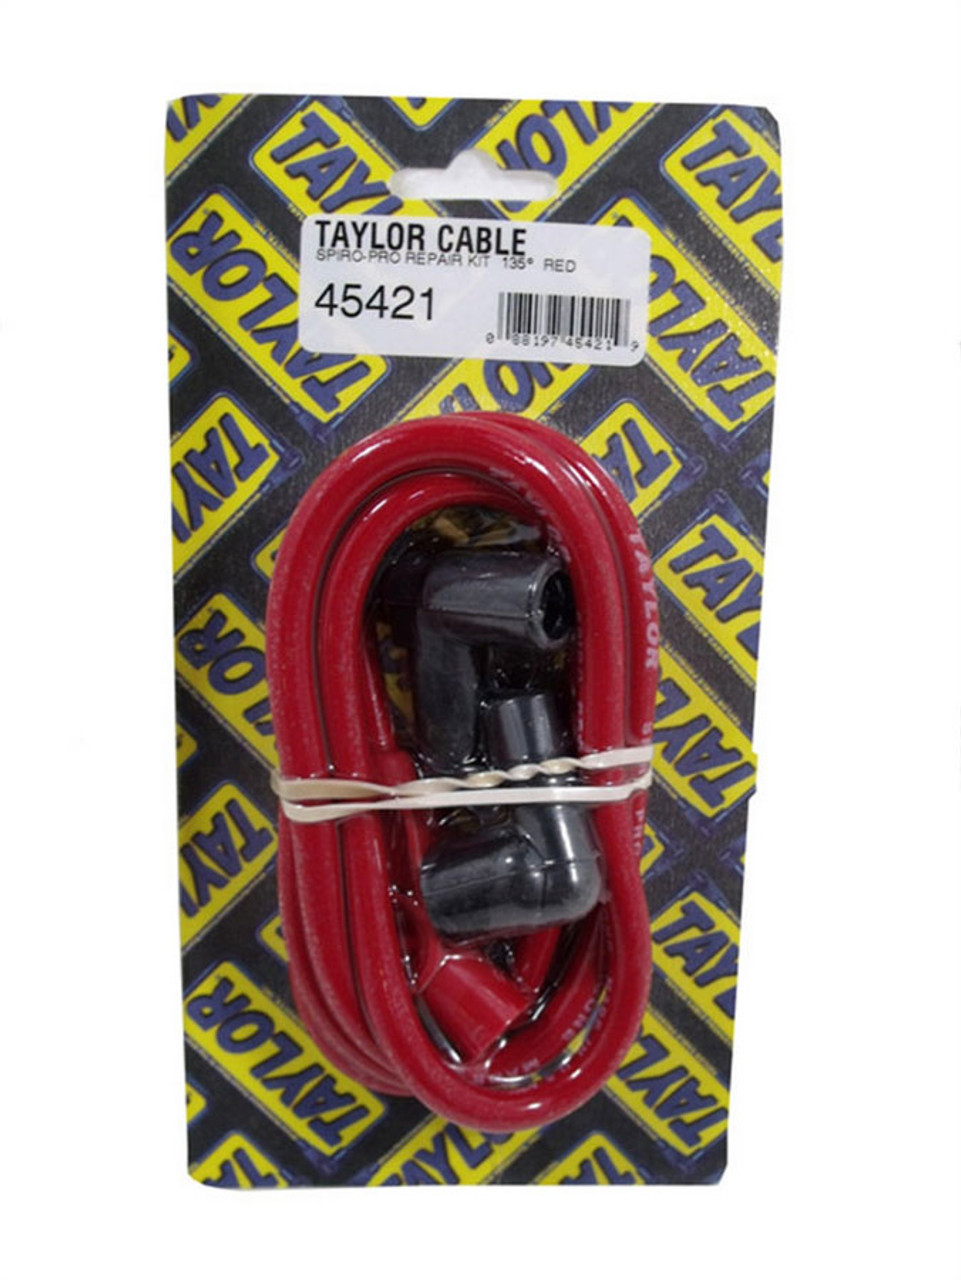 Taylor / Vertex Spiro-Pro 8mm Plug Wire Repair Kit 135 deg Red - TAY45421